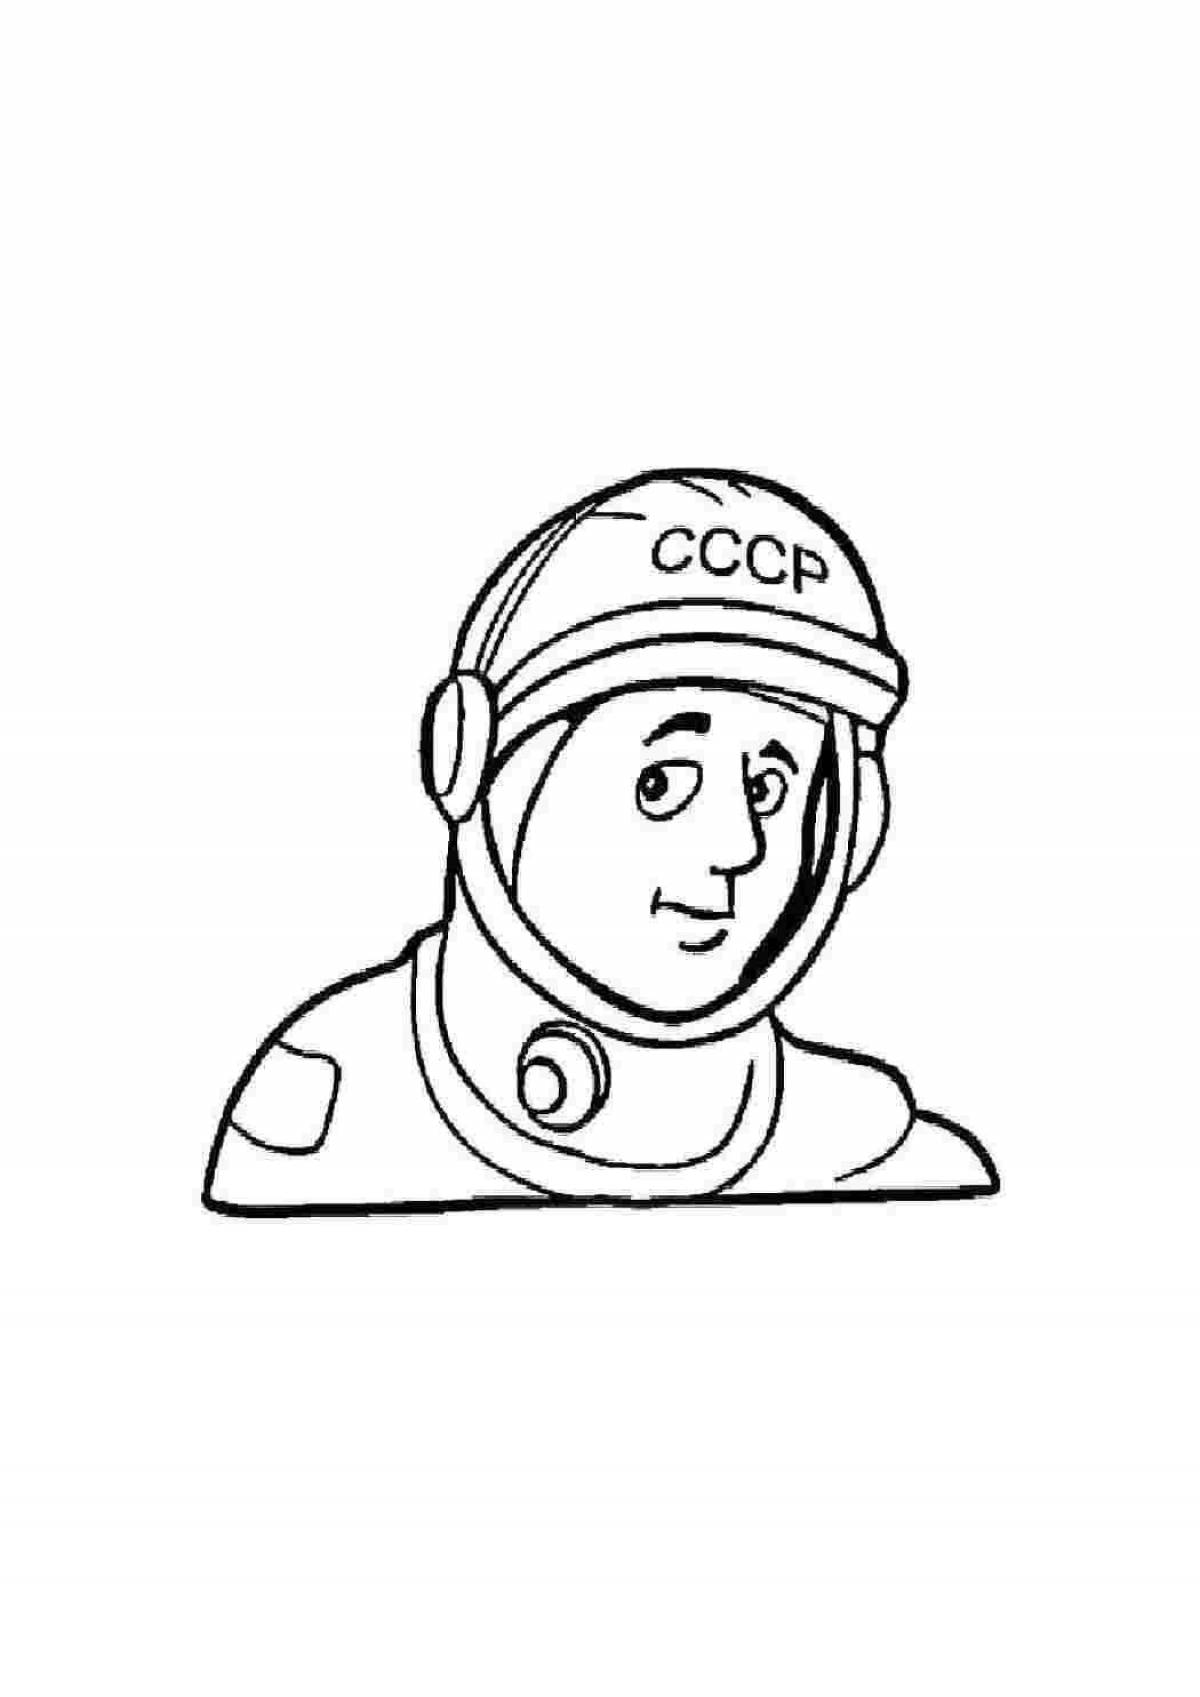 Colorful coloring day of cosmonautics